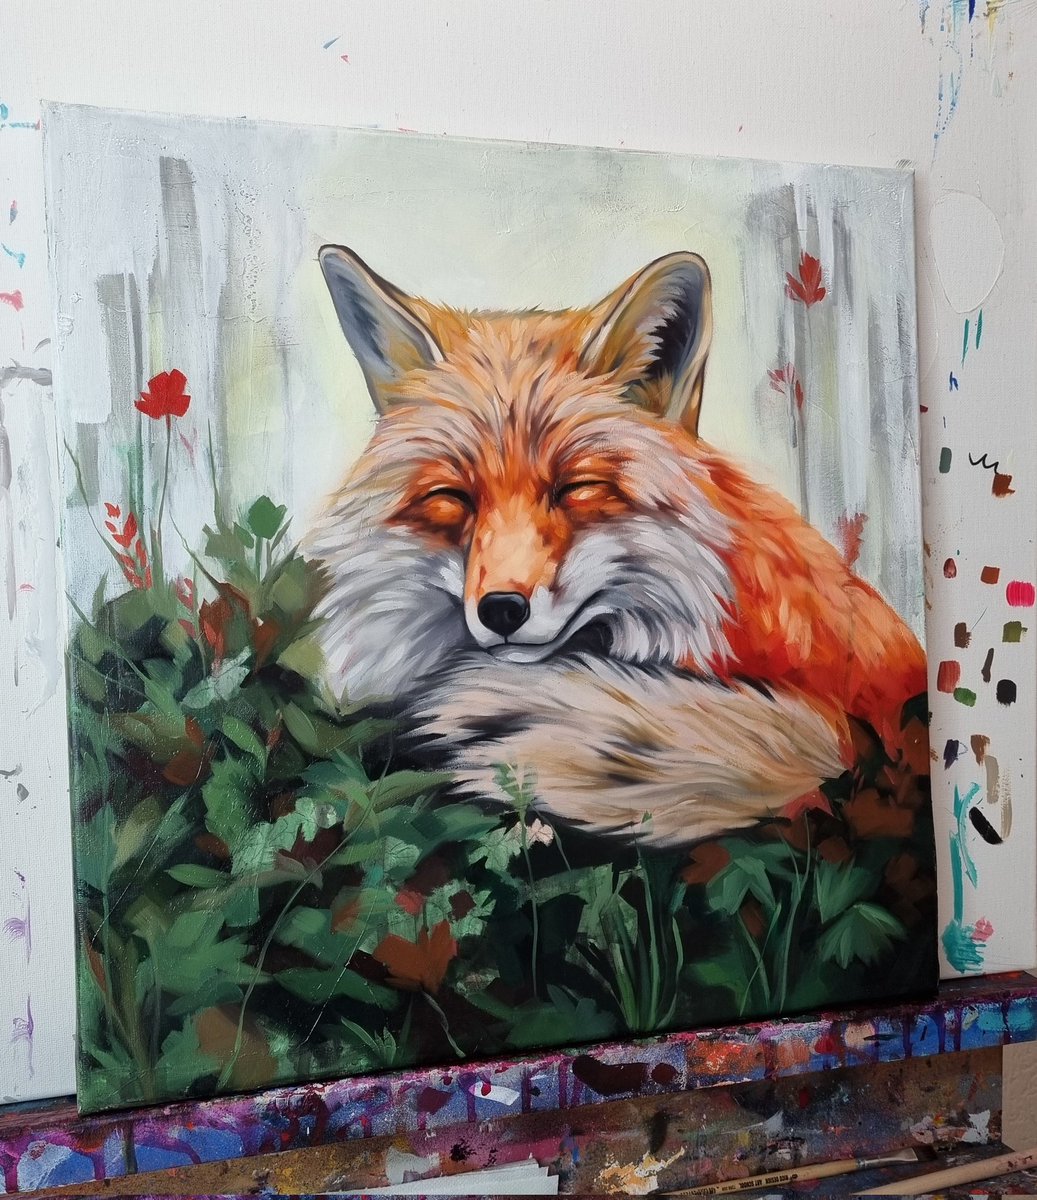 New Foxy in progress...
#wildlifeart #oilpainting #fox #foxlover